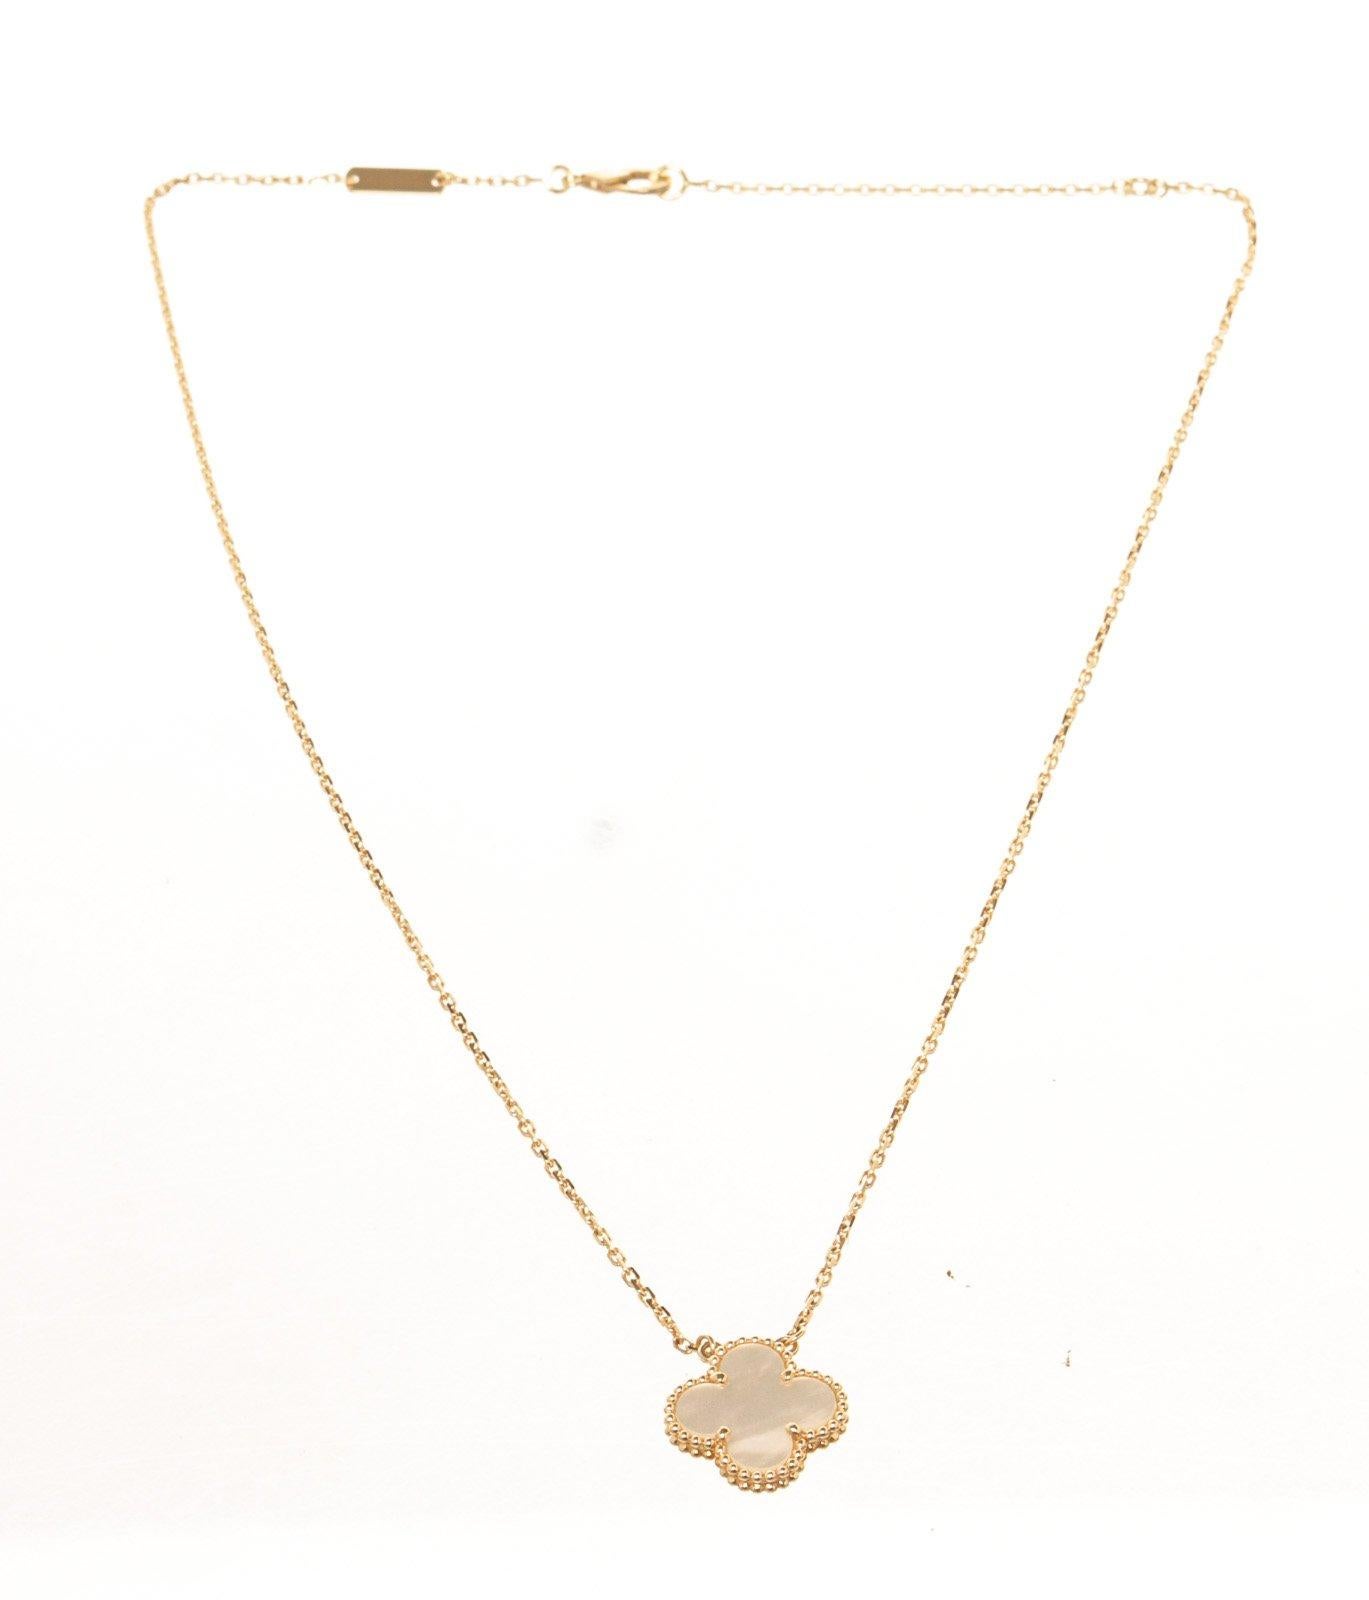 Van Cleef & Arpels Gold Vintage Alhambra Necklace with gold-tone hardware.

43479MSC